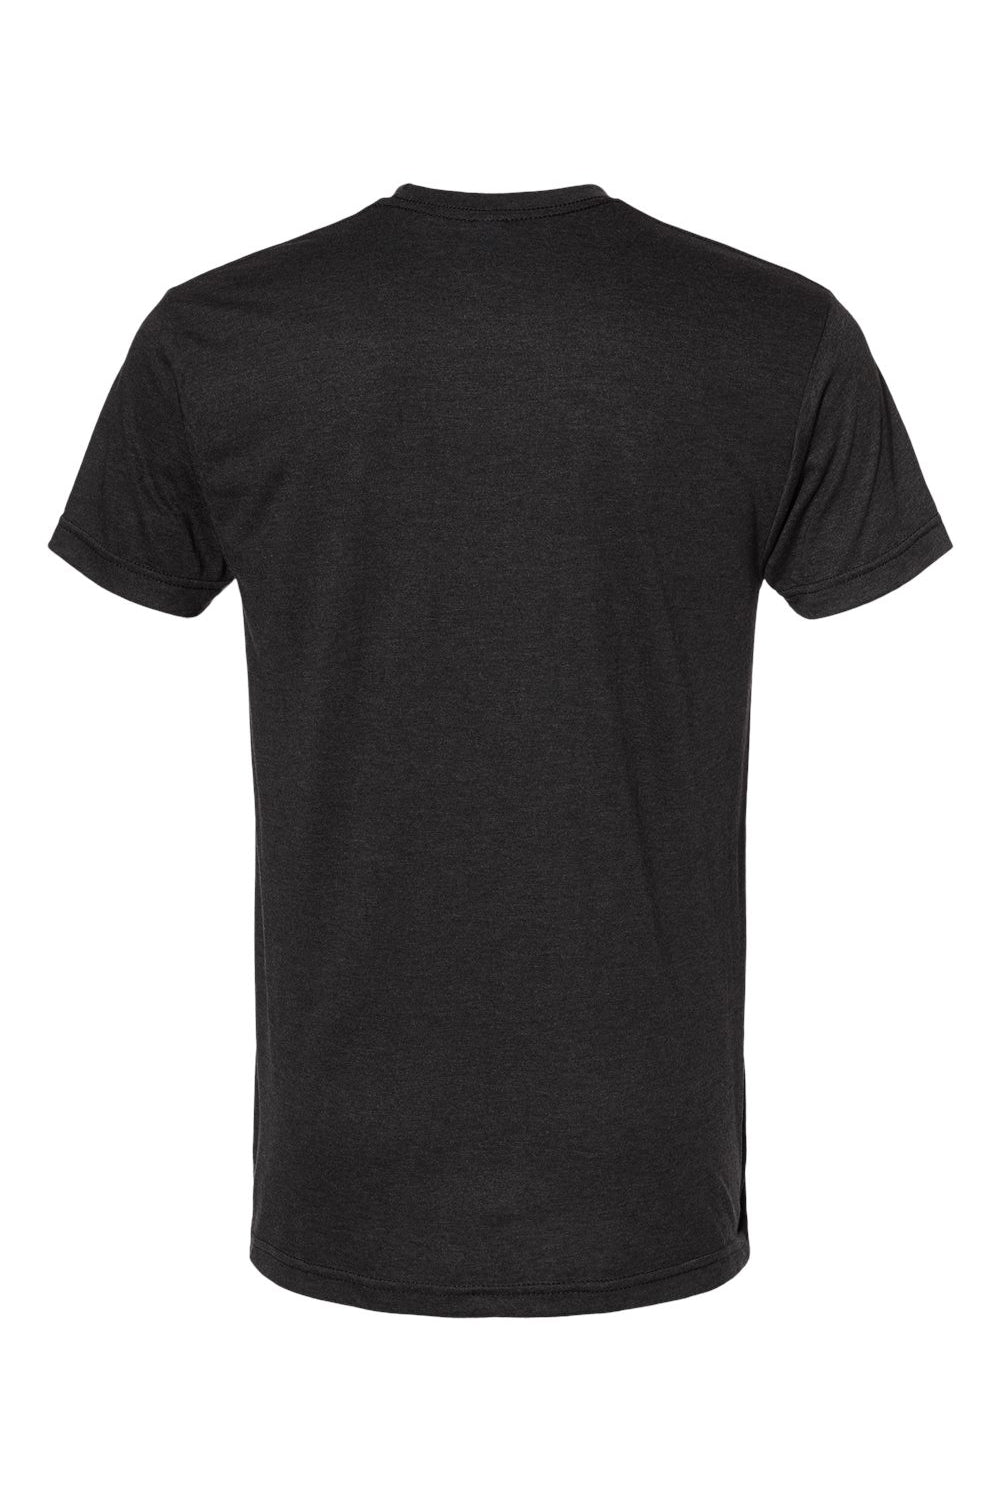 Bayside 5710 Mens USA Made Short Sleeve Crewneck T-Shirt Black Flat Back